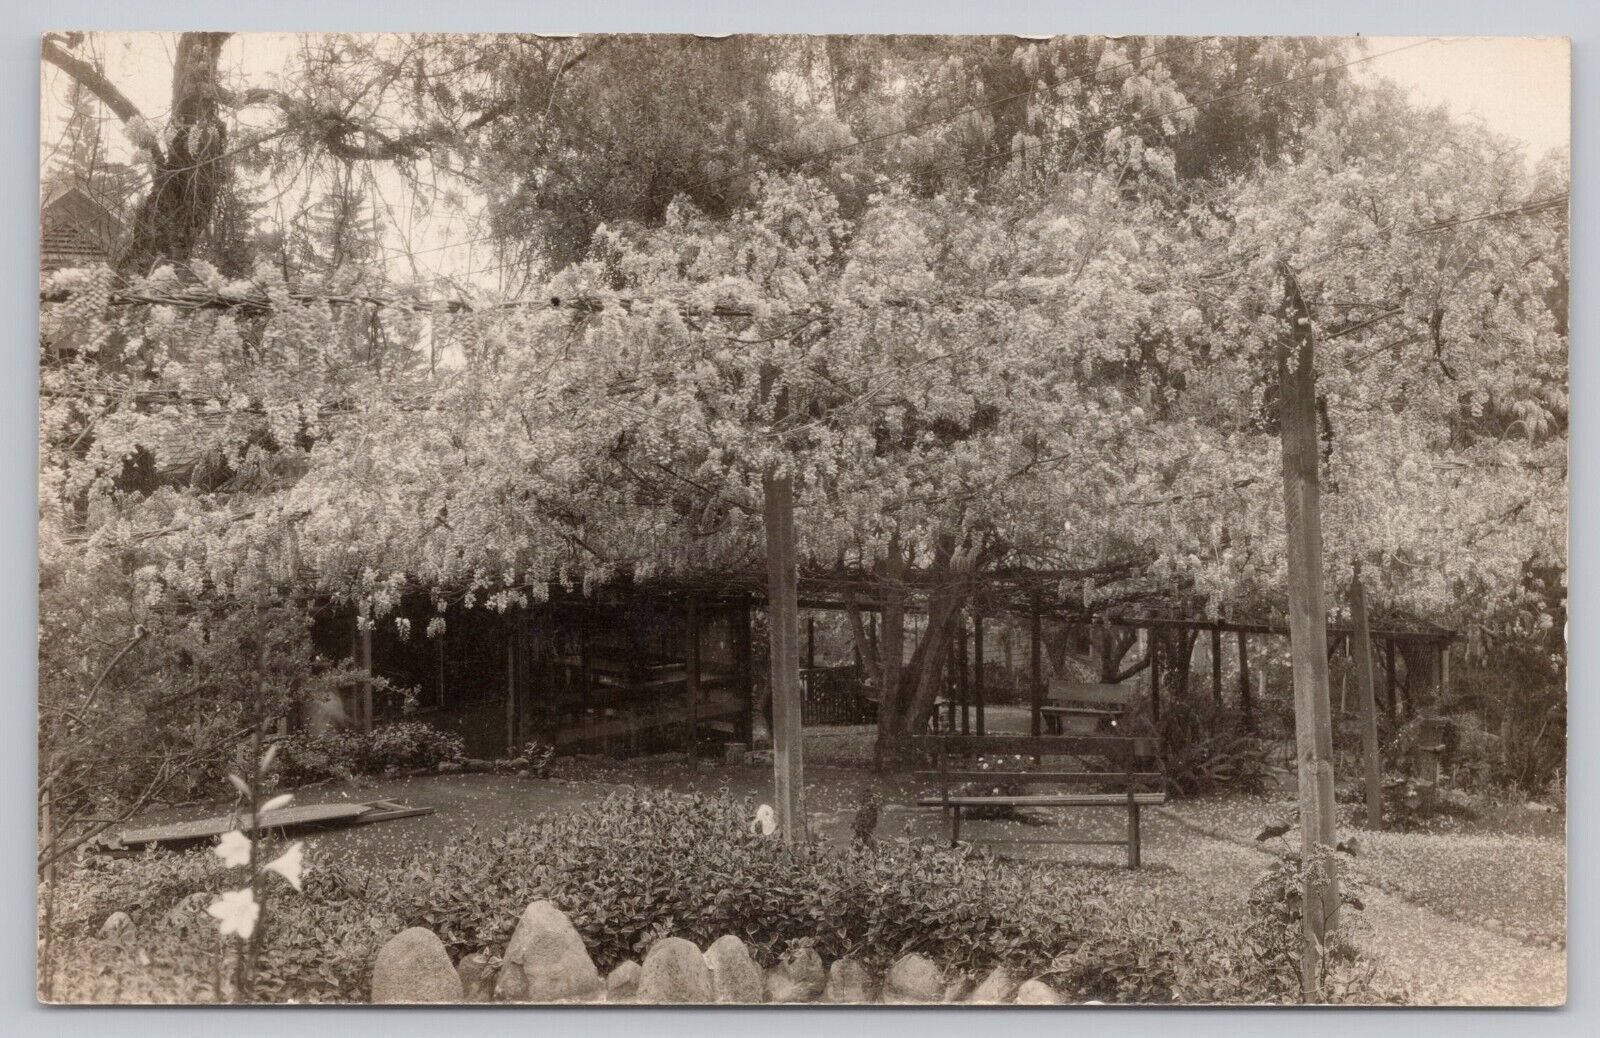 Sierra Madre California, Large Wisteria Vine, Vintage RPPC Real Photo Postcard